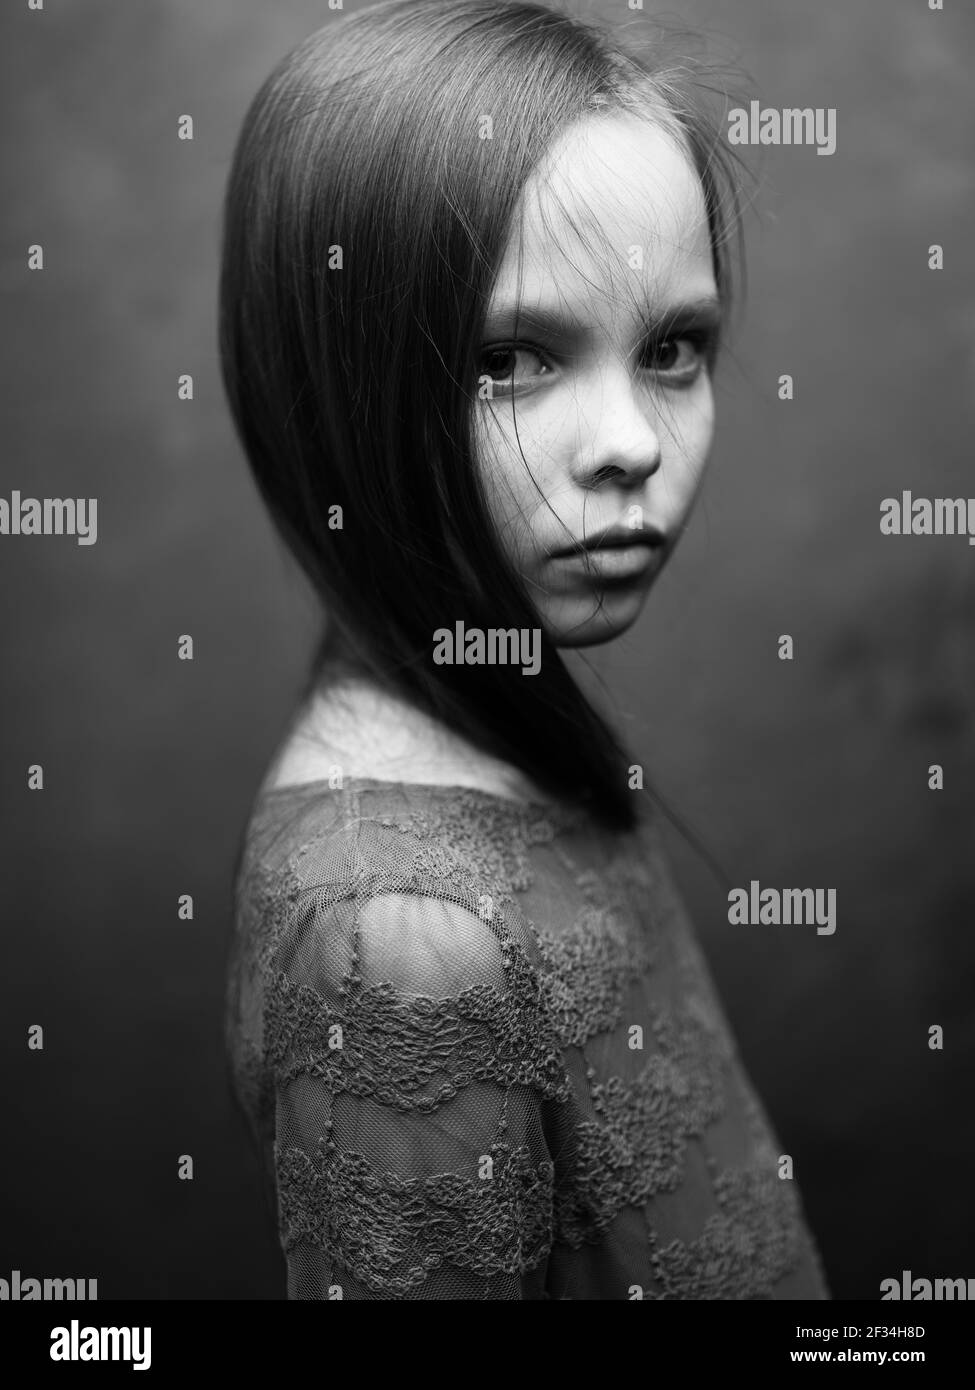 Portrait of a beautiful little girl gray photo dress model side view ...